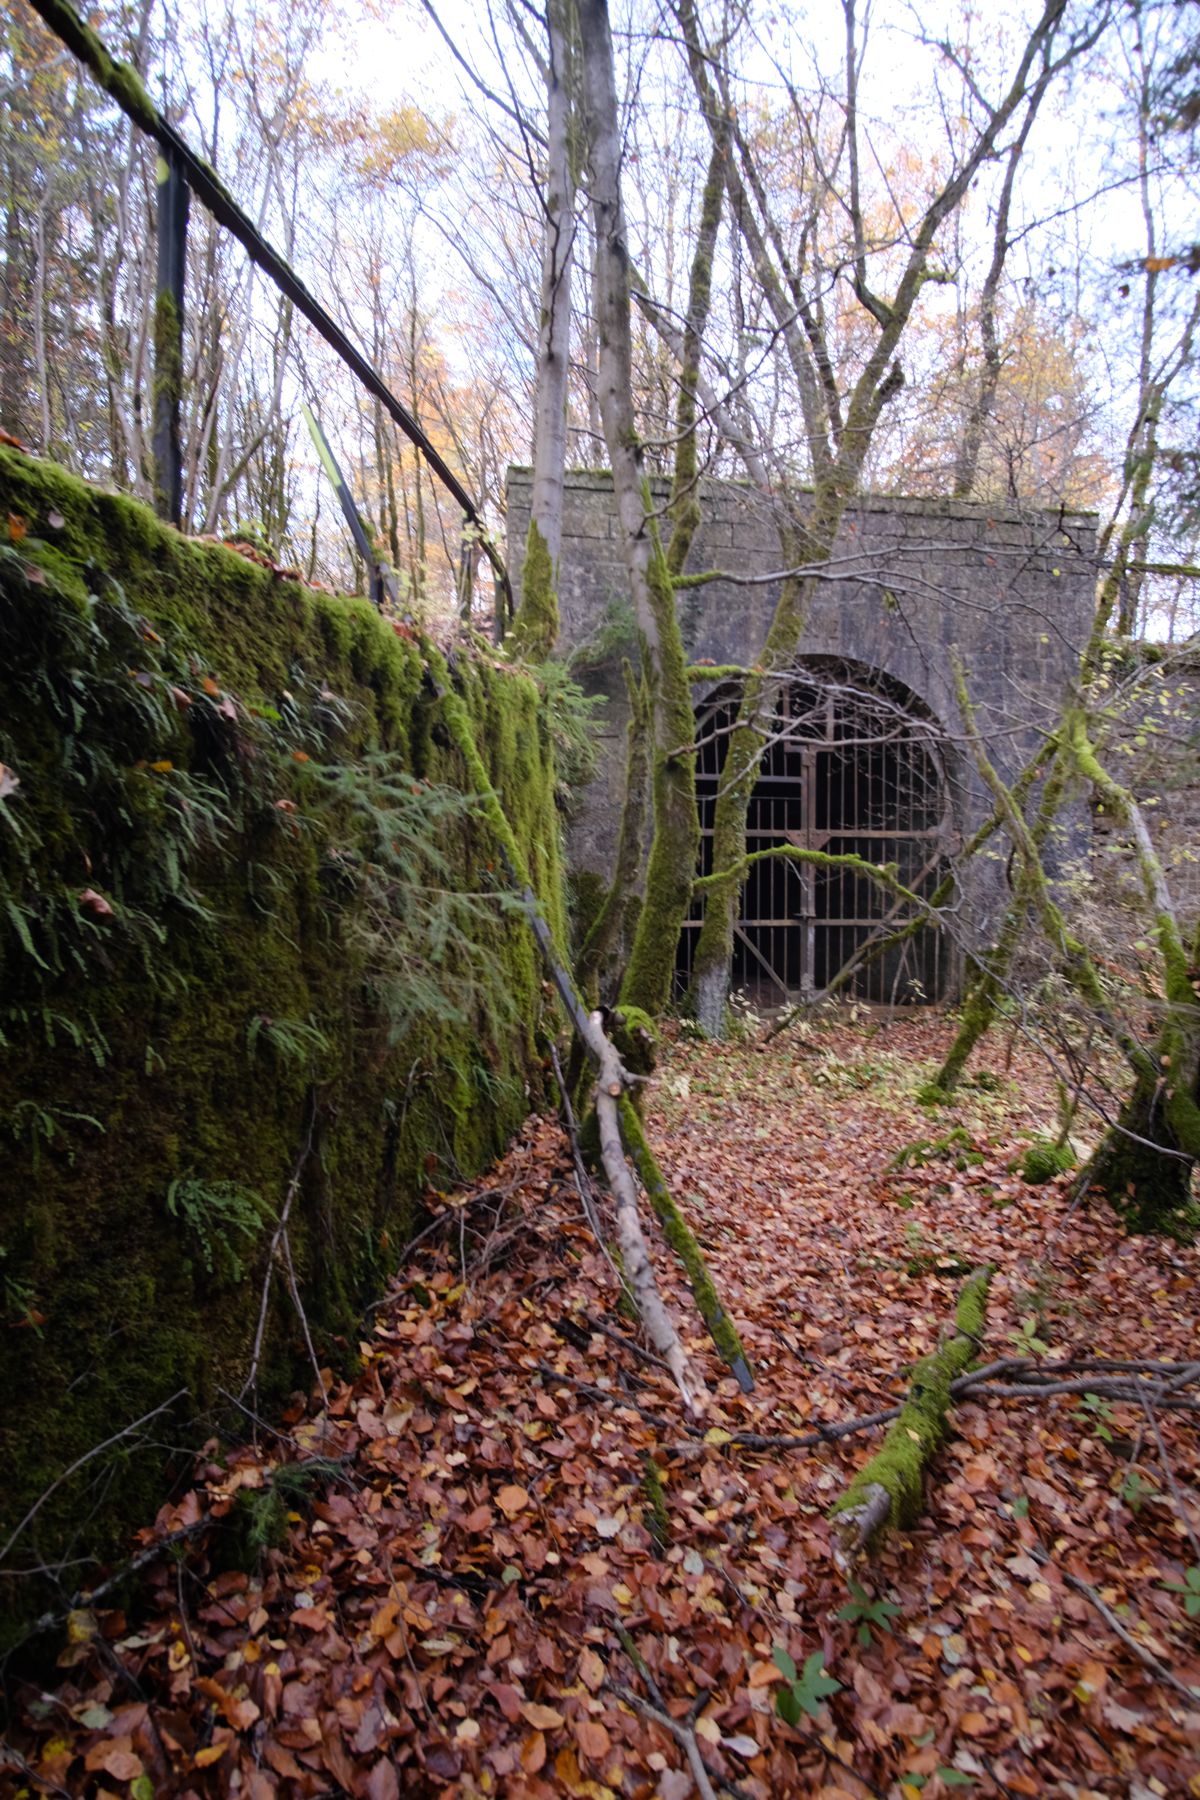 Abandoned tunnel